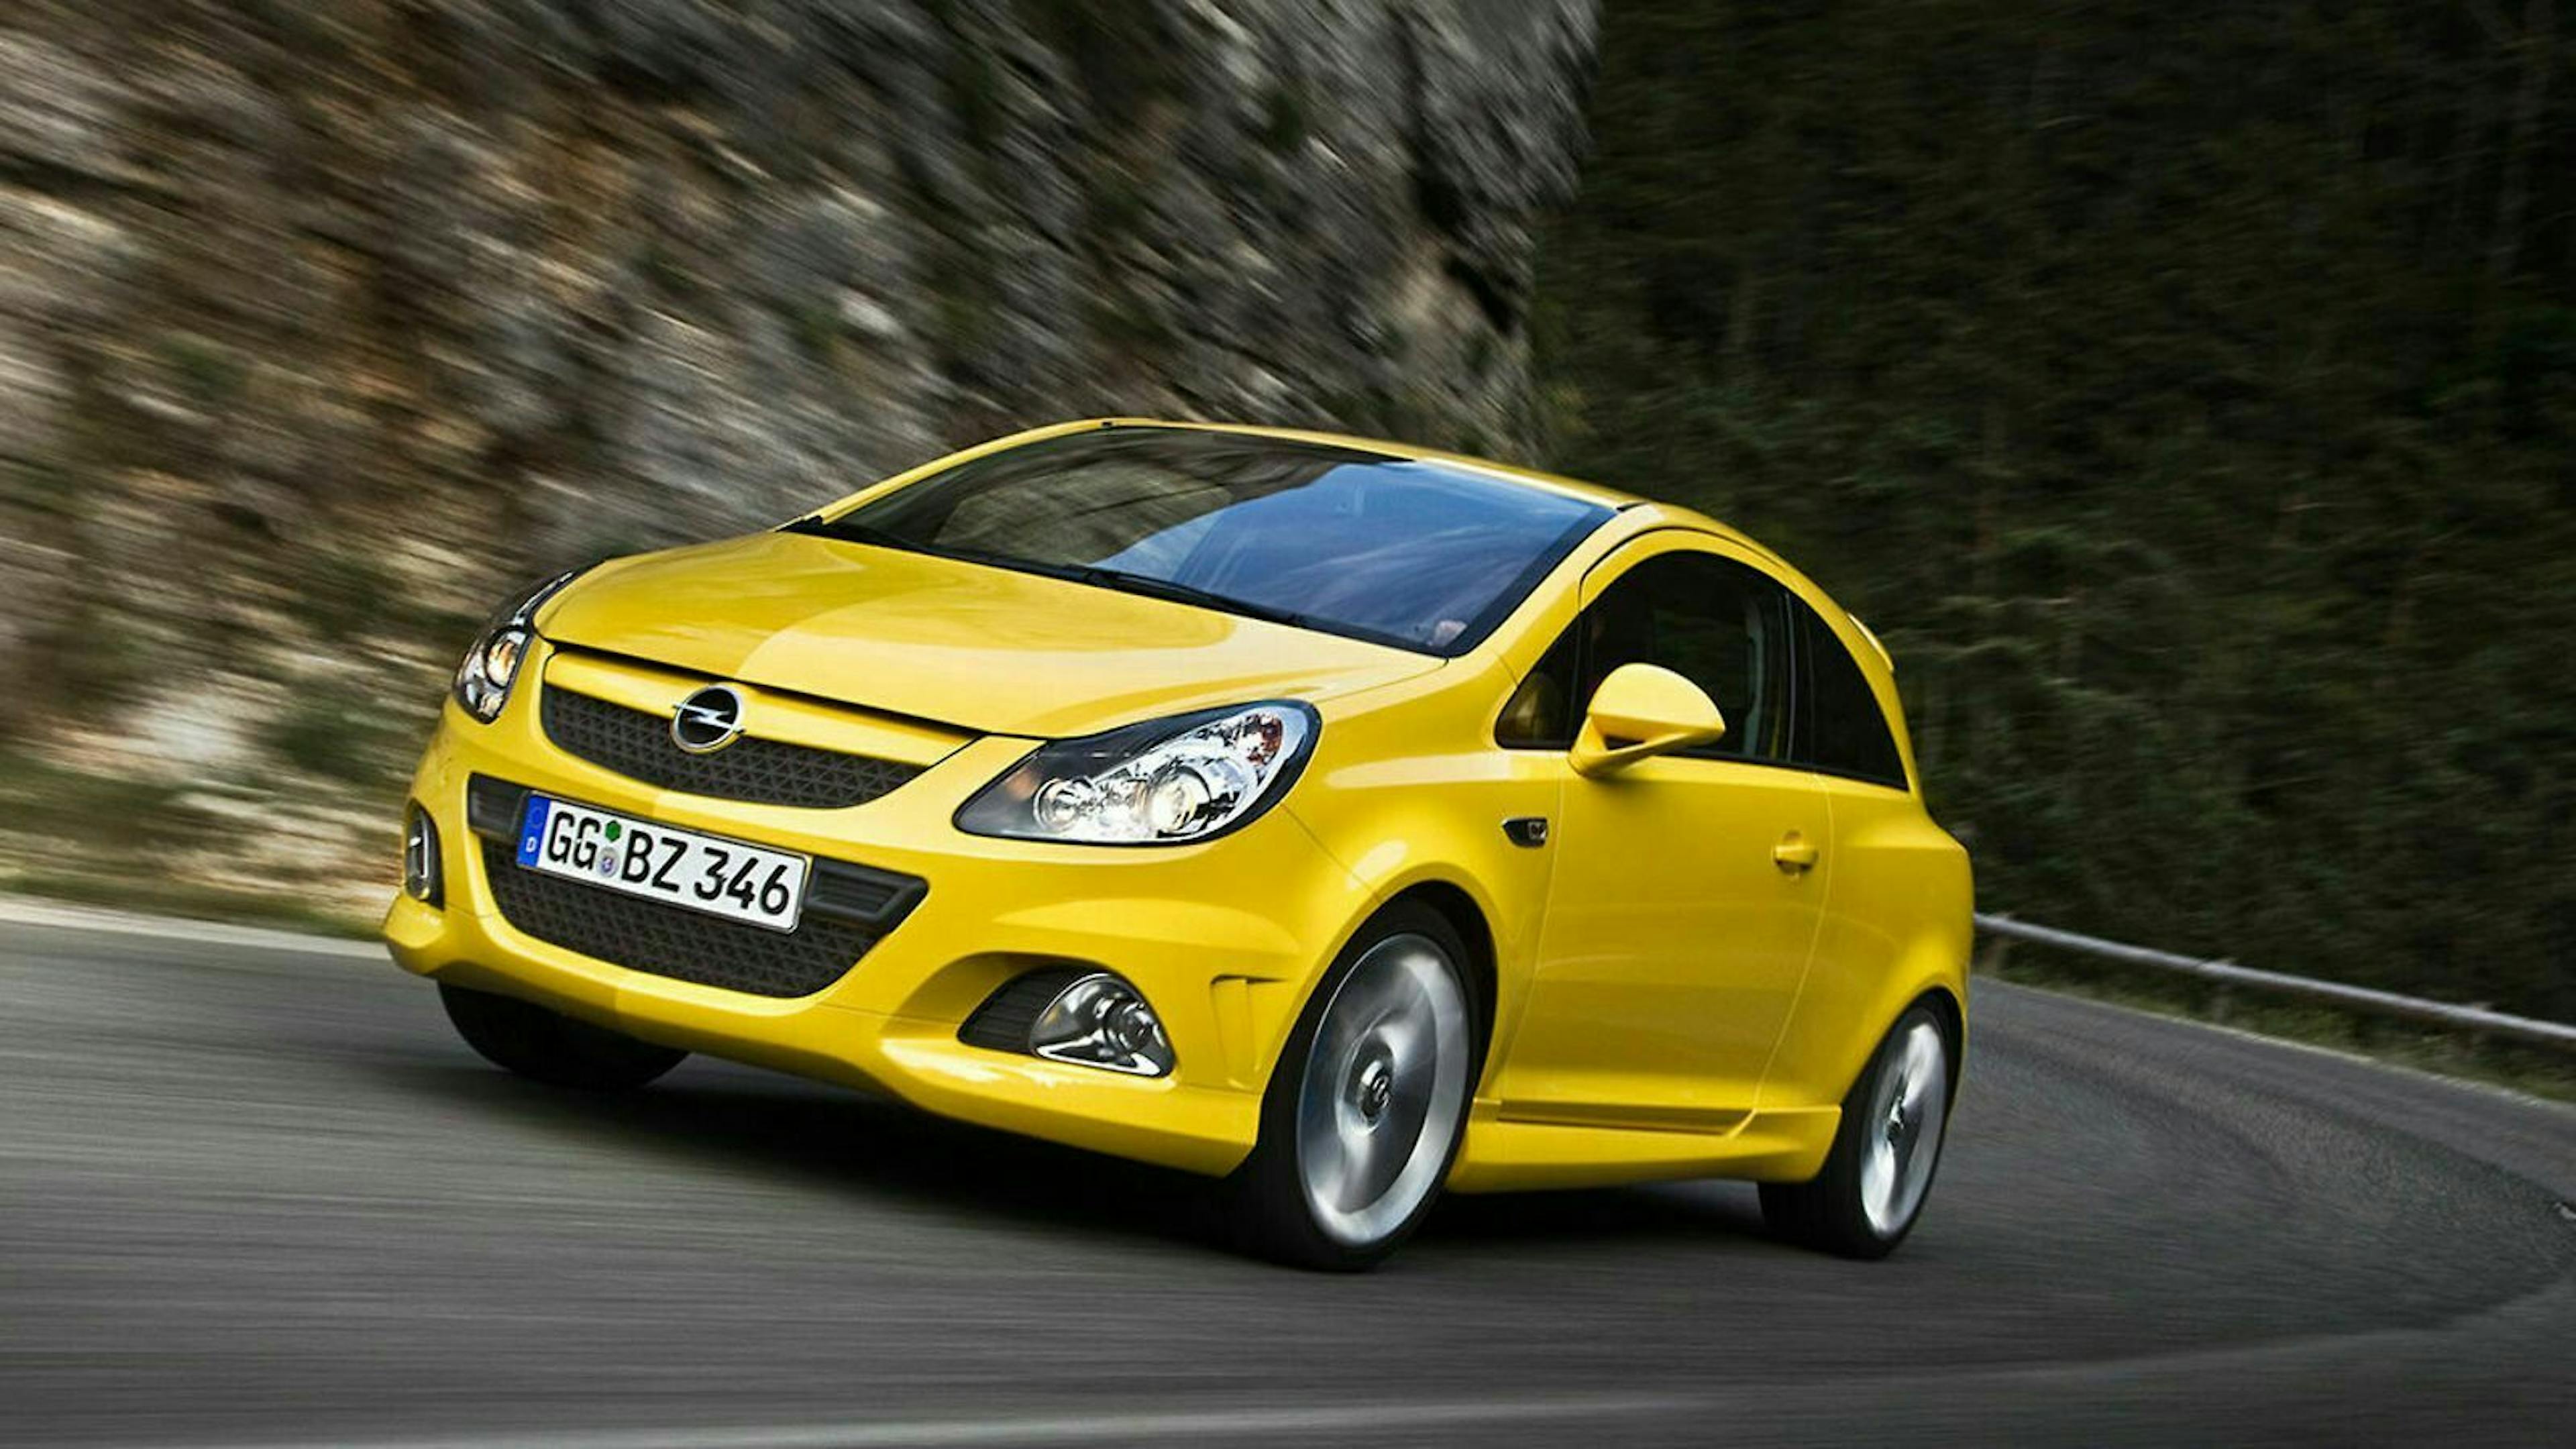 Opel Corsa D OPC